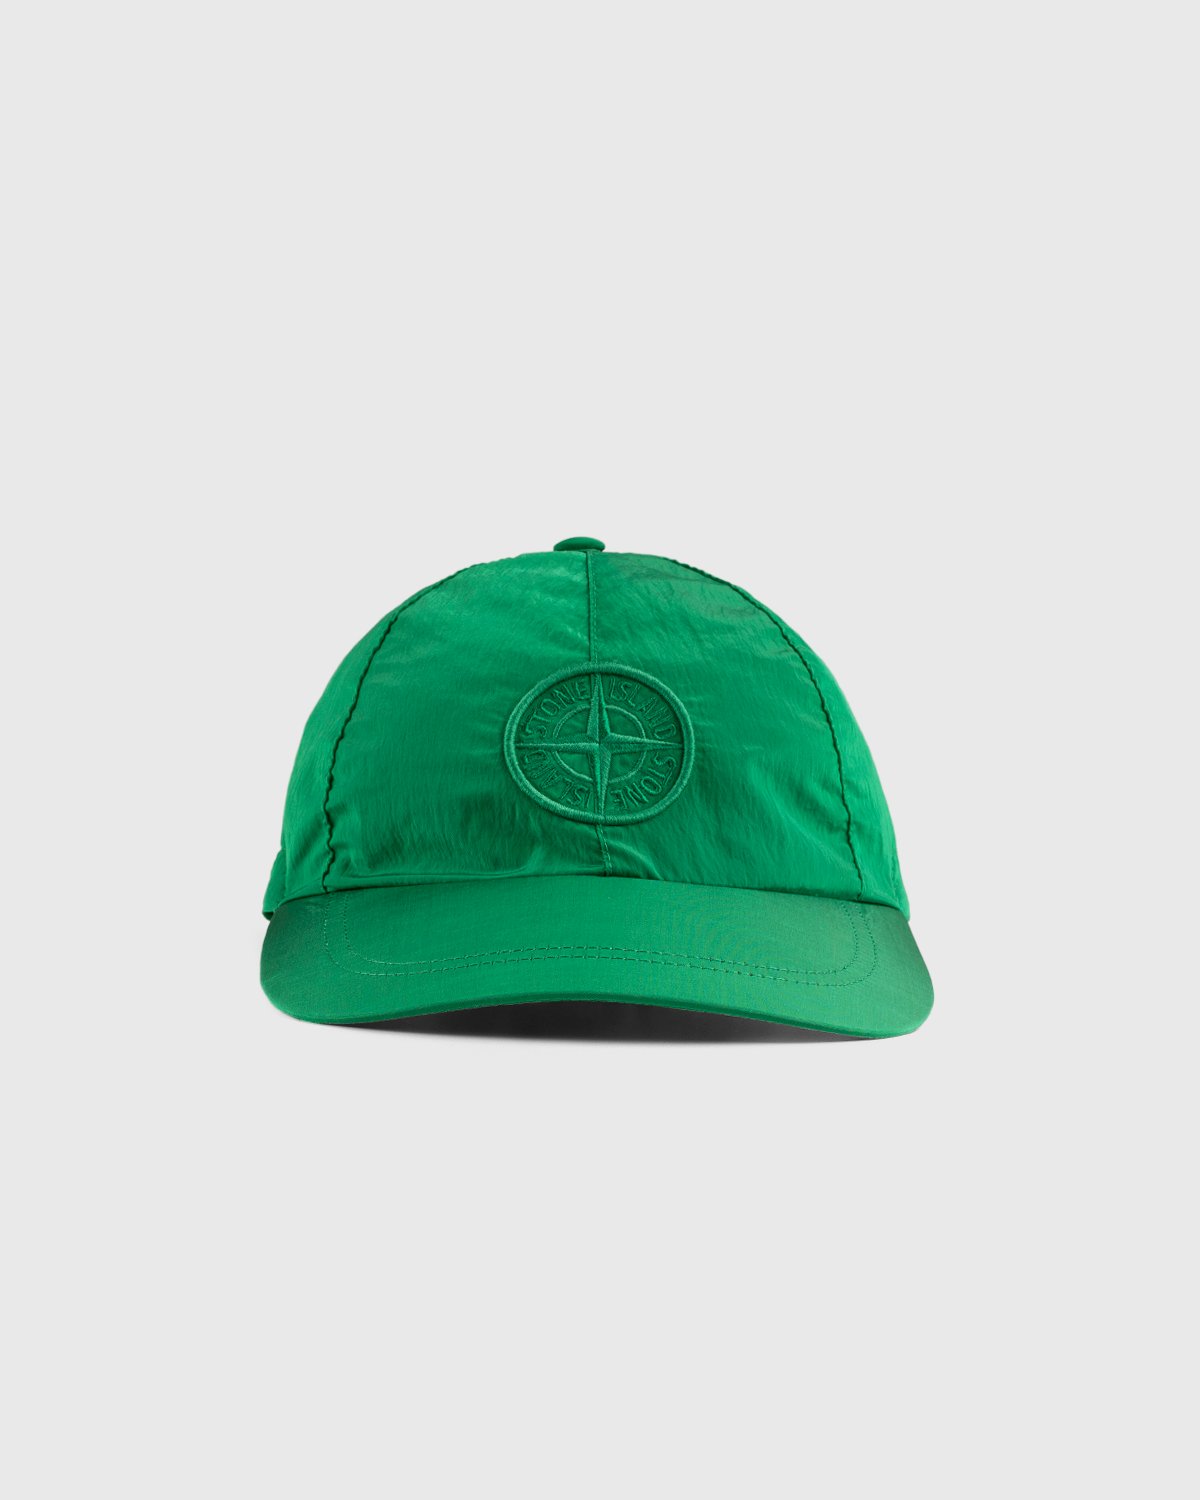 Stone Island - Six Panel Hat Green - Accessories - Green - Image 3